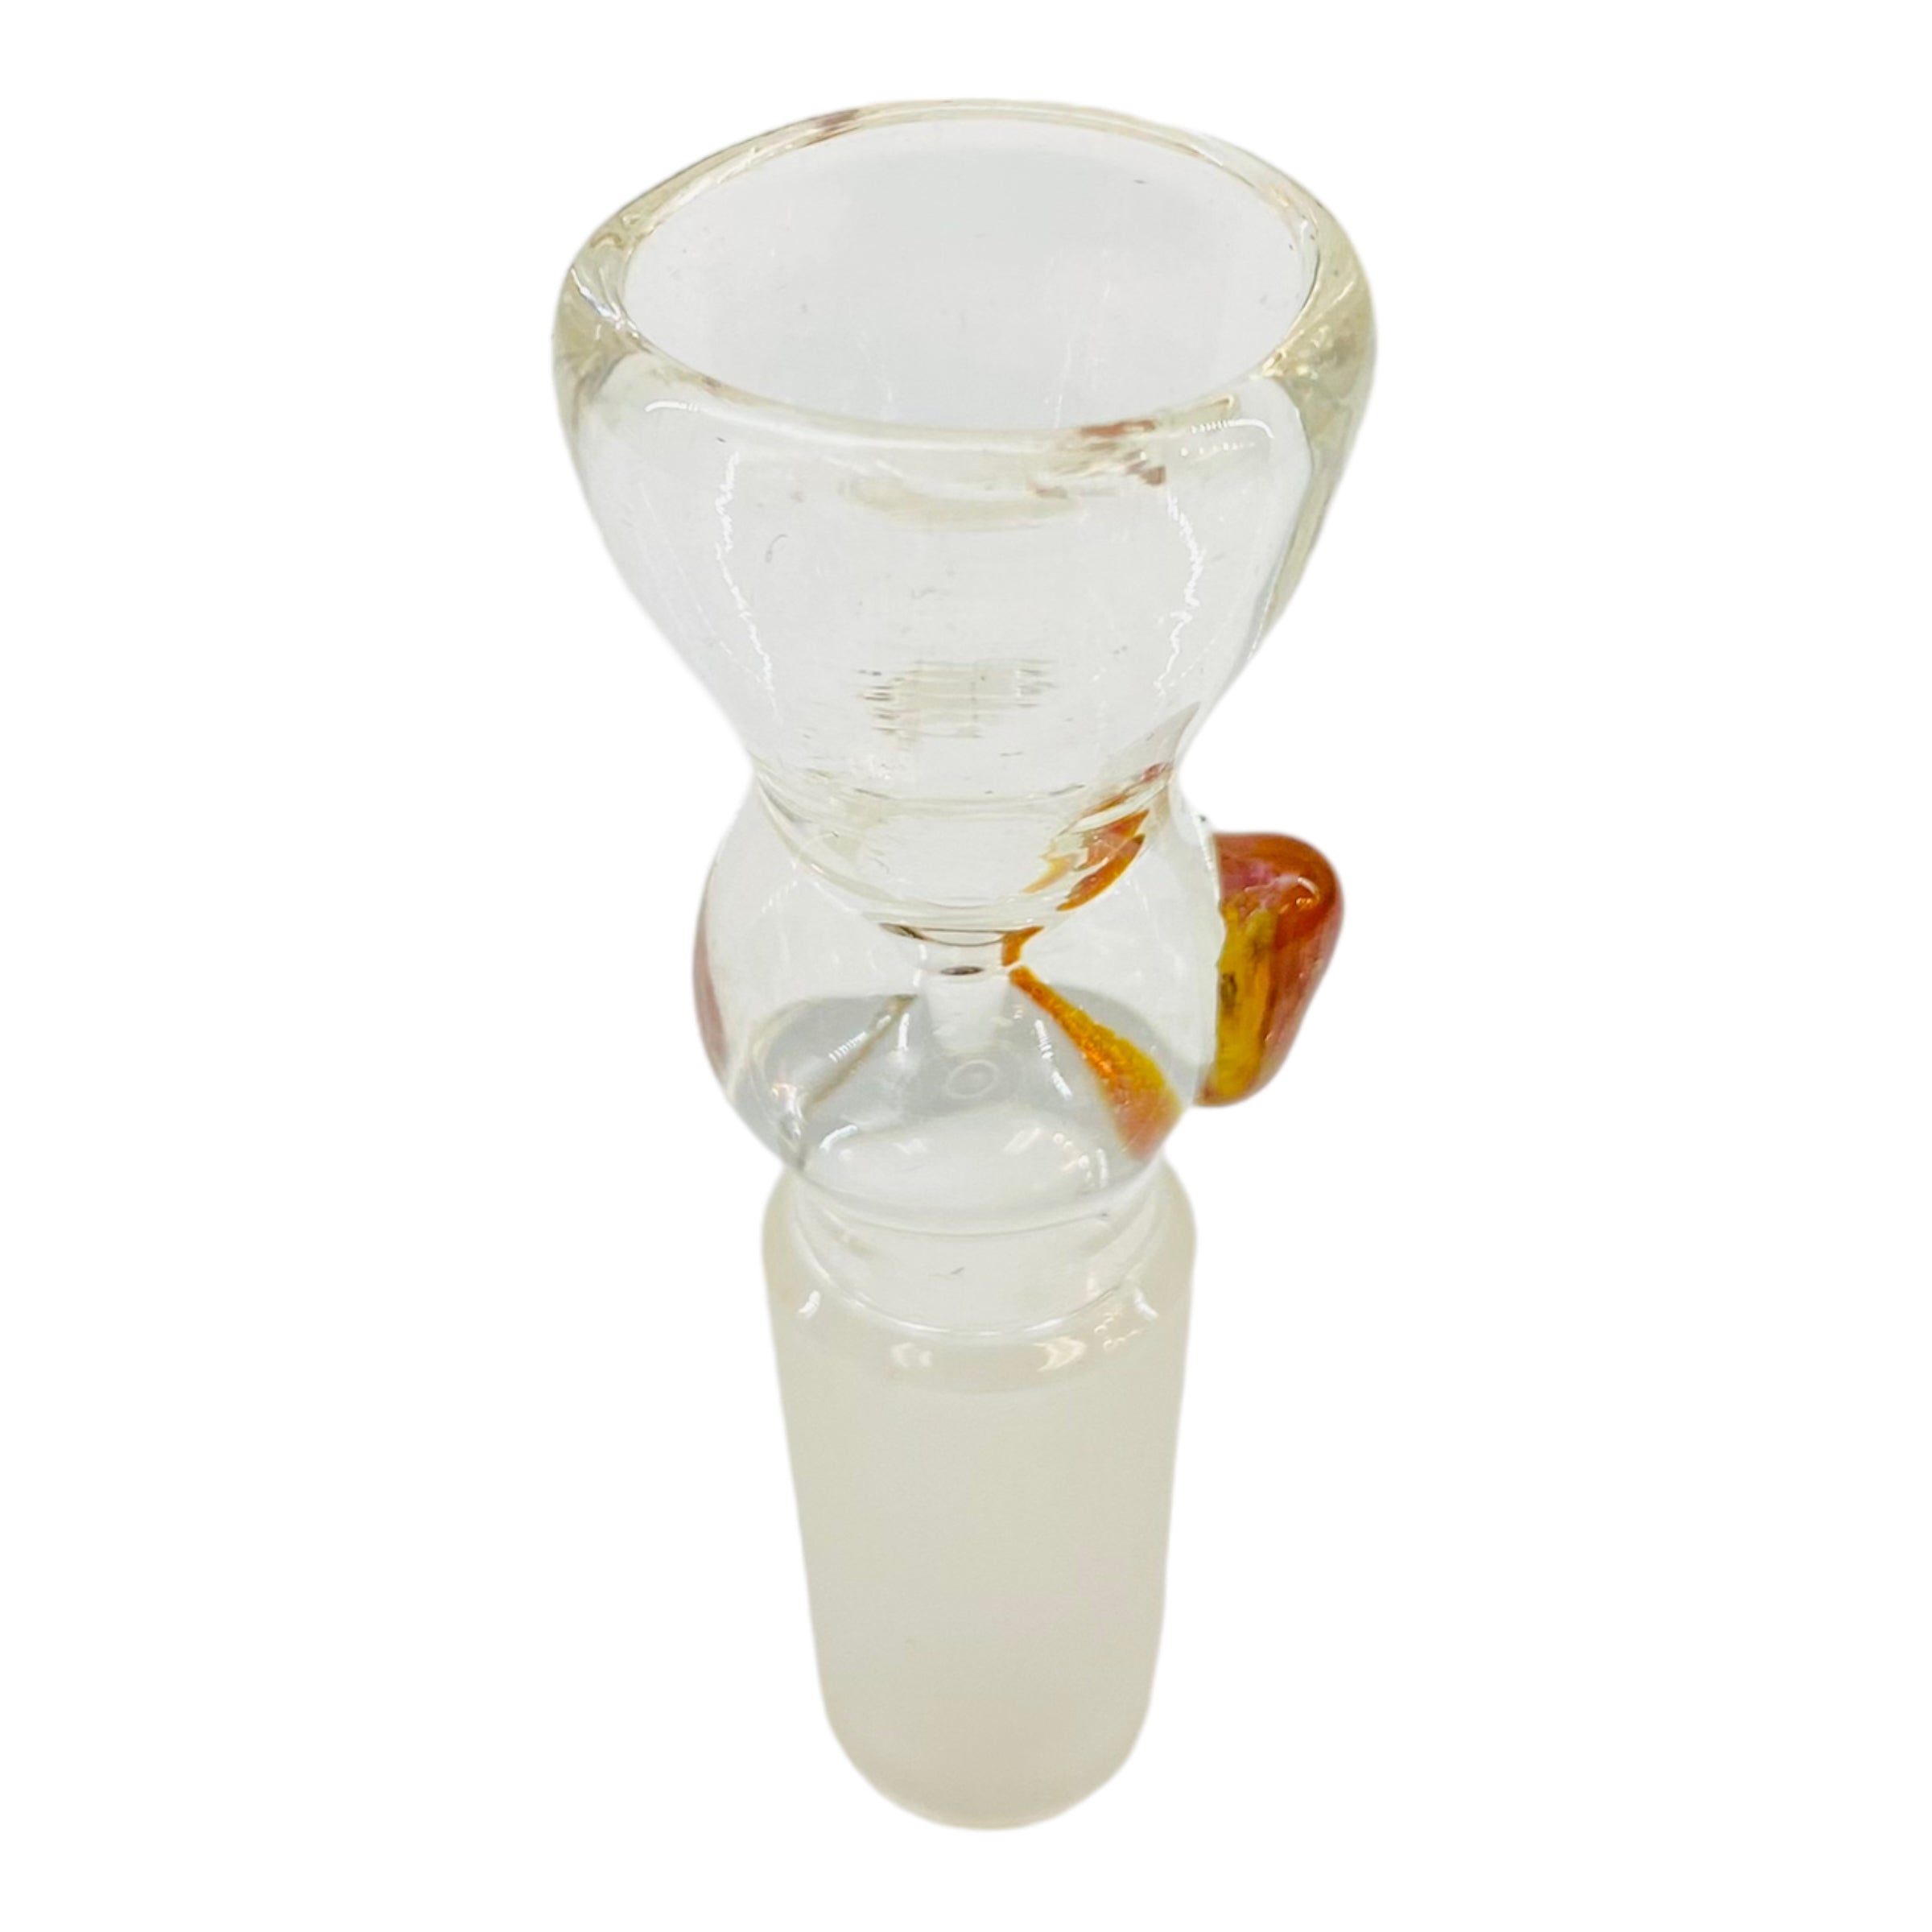 14mm Flower Bowl - Clear Martini Shape Funnel Bong Bowl Piece With Color Dot - Orange